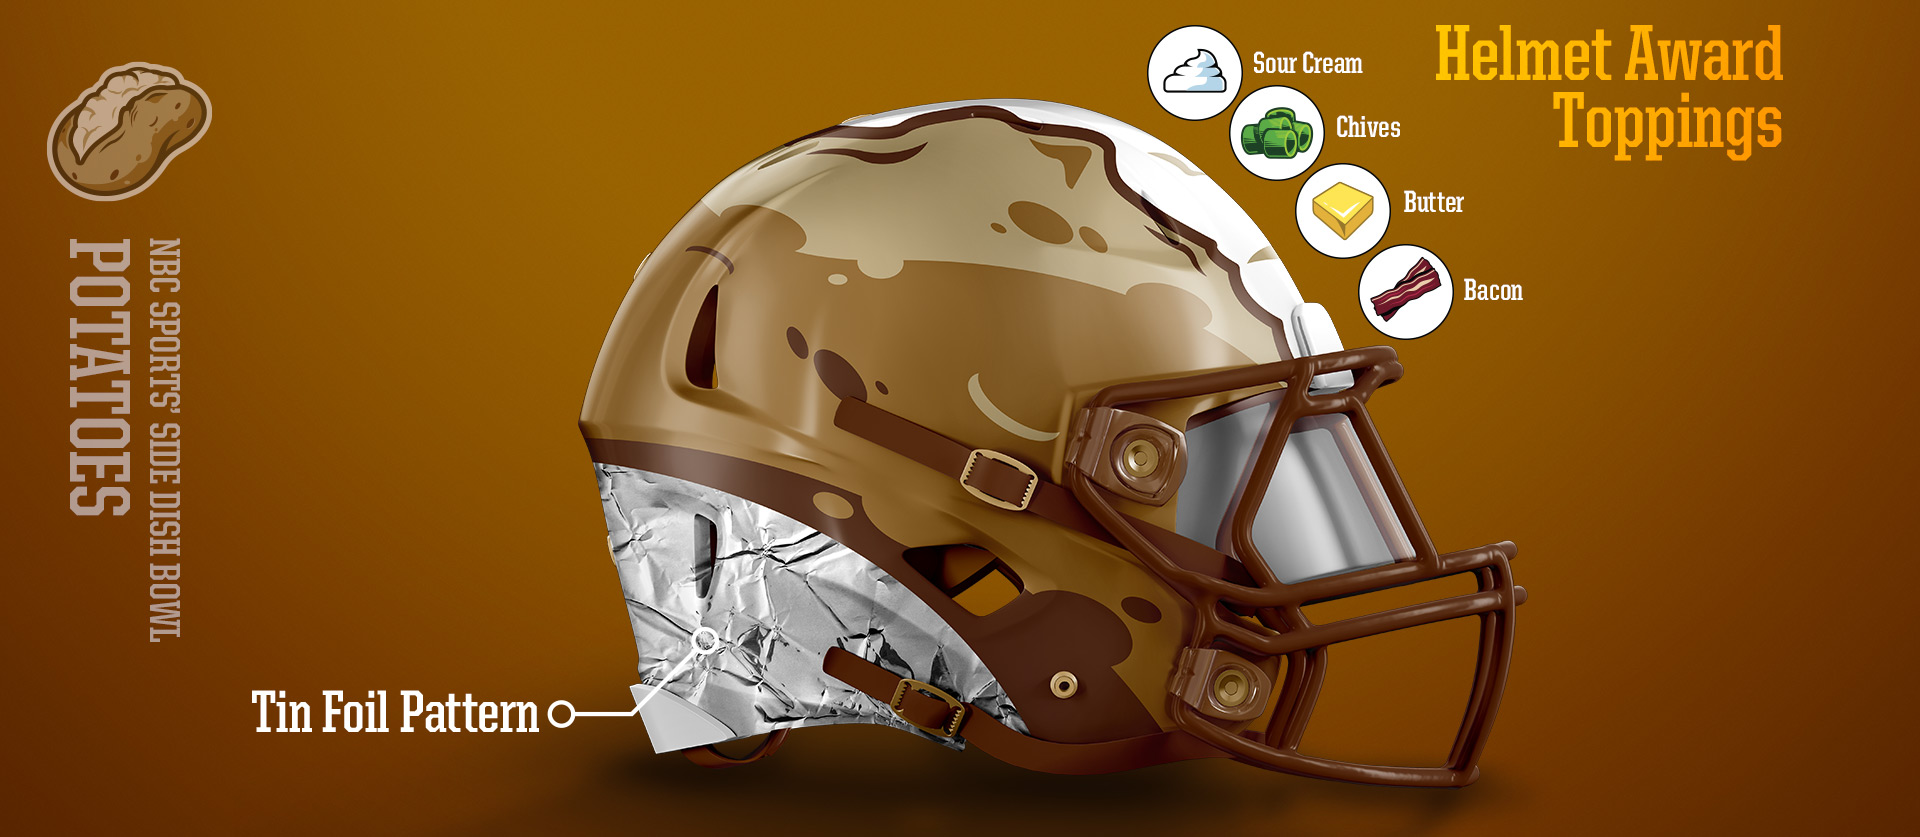 Potatoes Helmet Side View - Football Uniform Design for NBC Sports Thanksgiving Side Dish Bowl